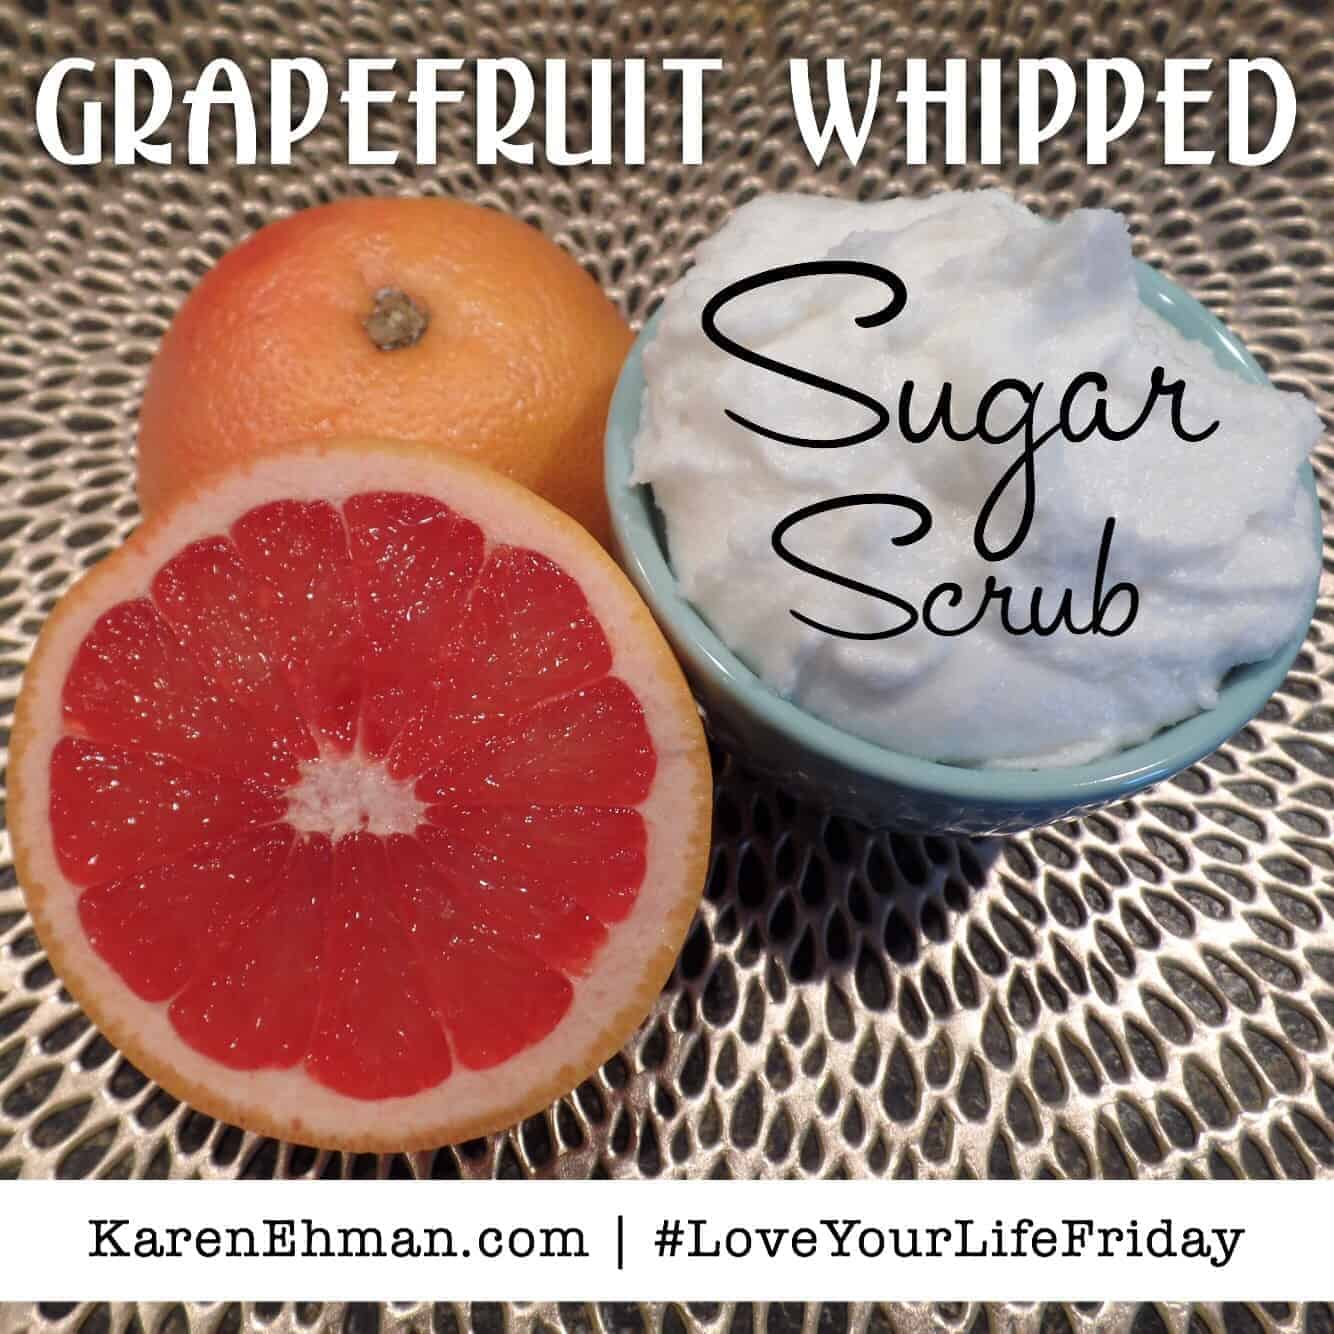 Grapefruit Whipped Sugar Scrub by Sarah Lundgren for #LoveYourLifeFriday at karenehman.com.